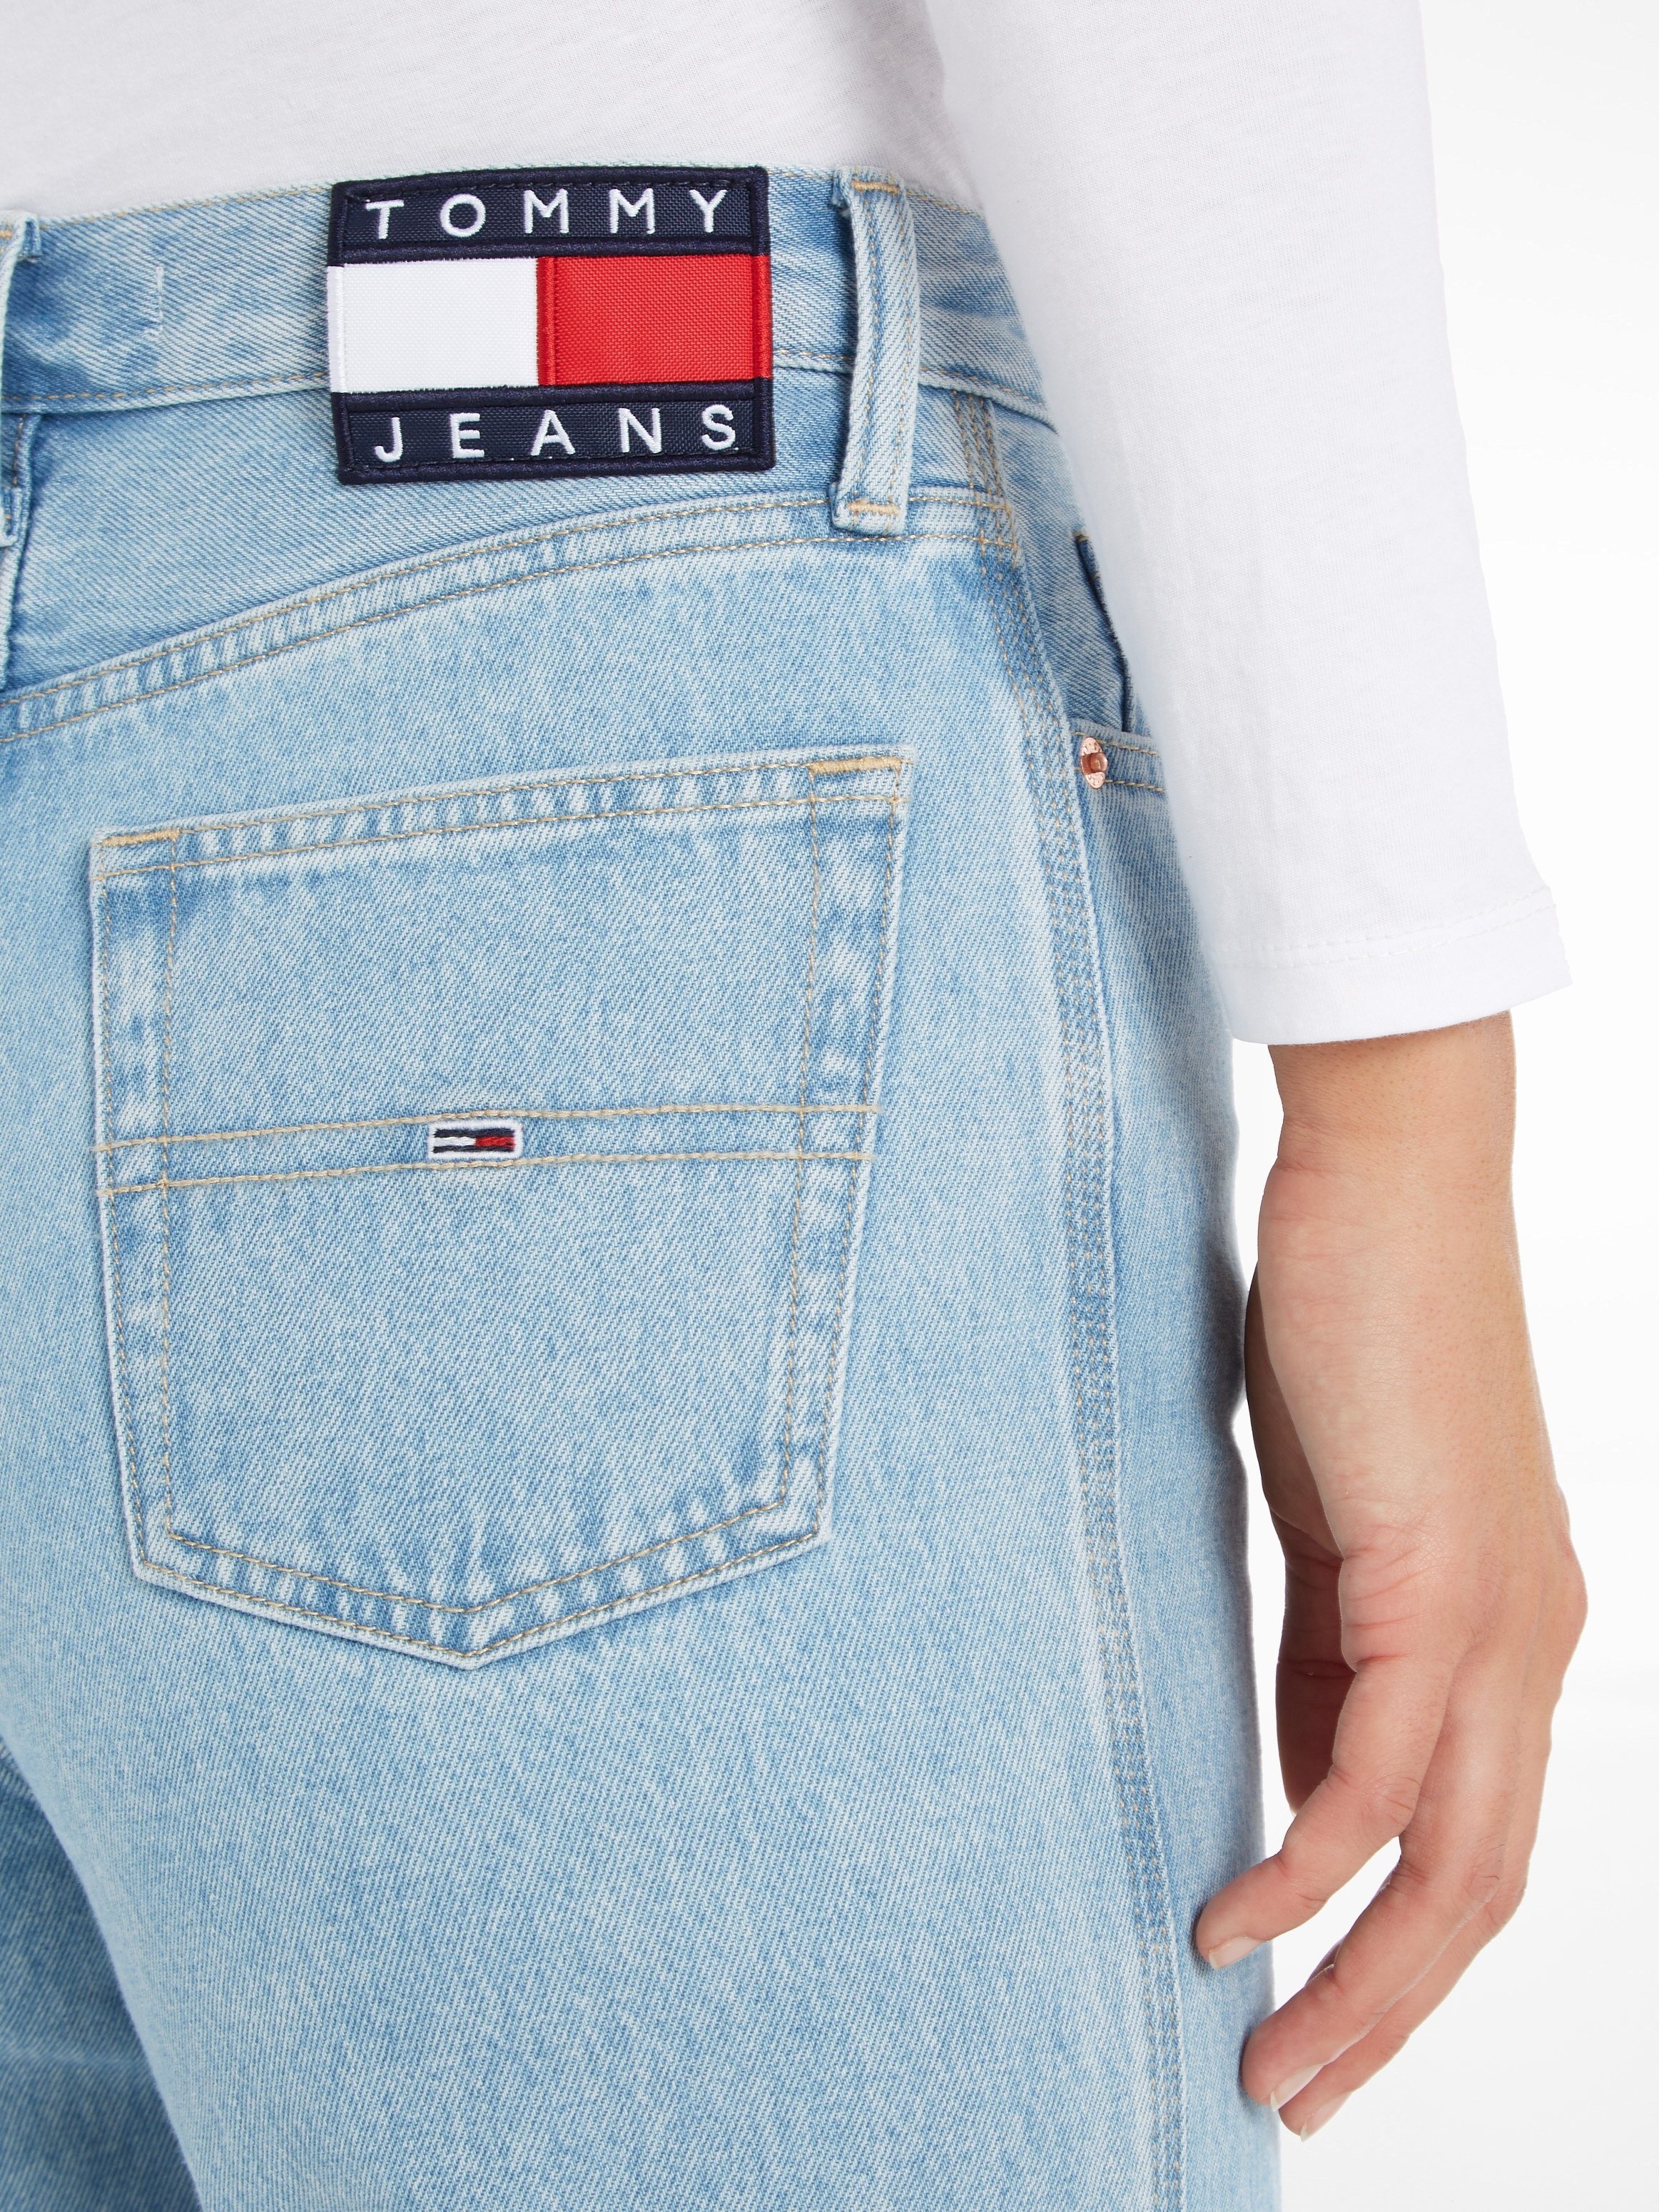 Jeans Jeans Tommy Jeans denim light Weite Tommy mit Logobadges